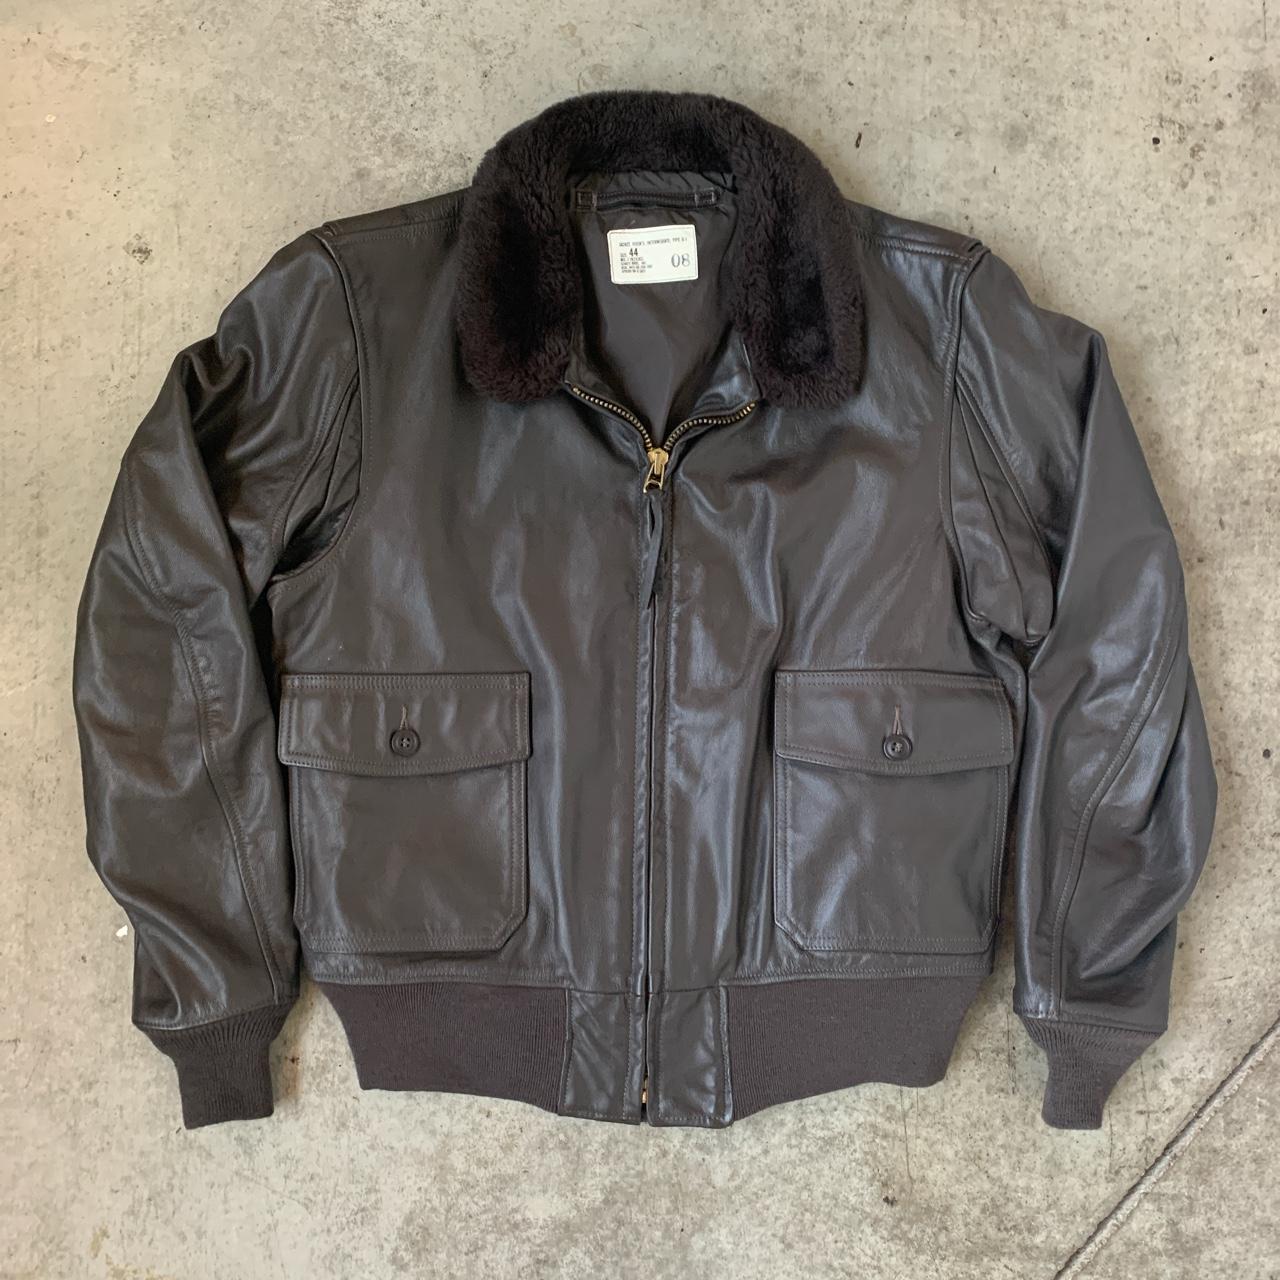 Vintage 90s Type G-1 jacket Good condition Minor... - Depop